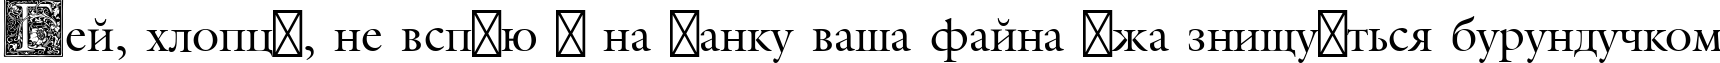 Пример написания шрифтом Medieval Initial One текста на украинском